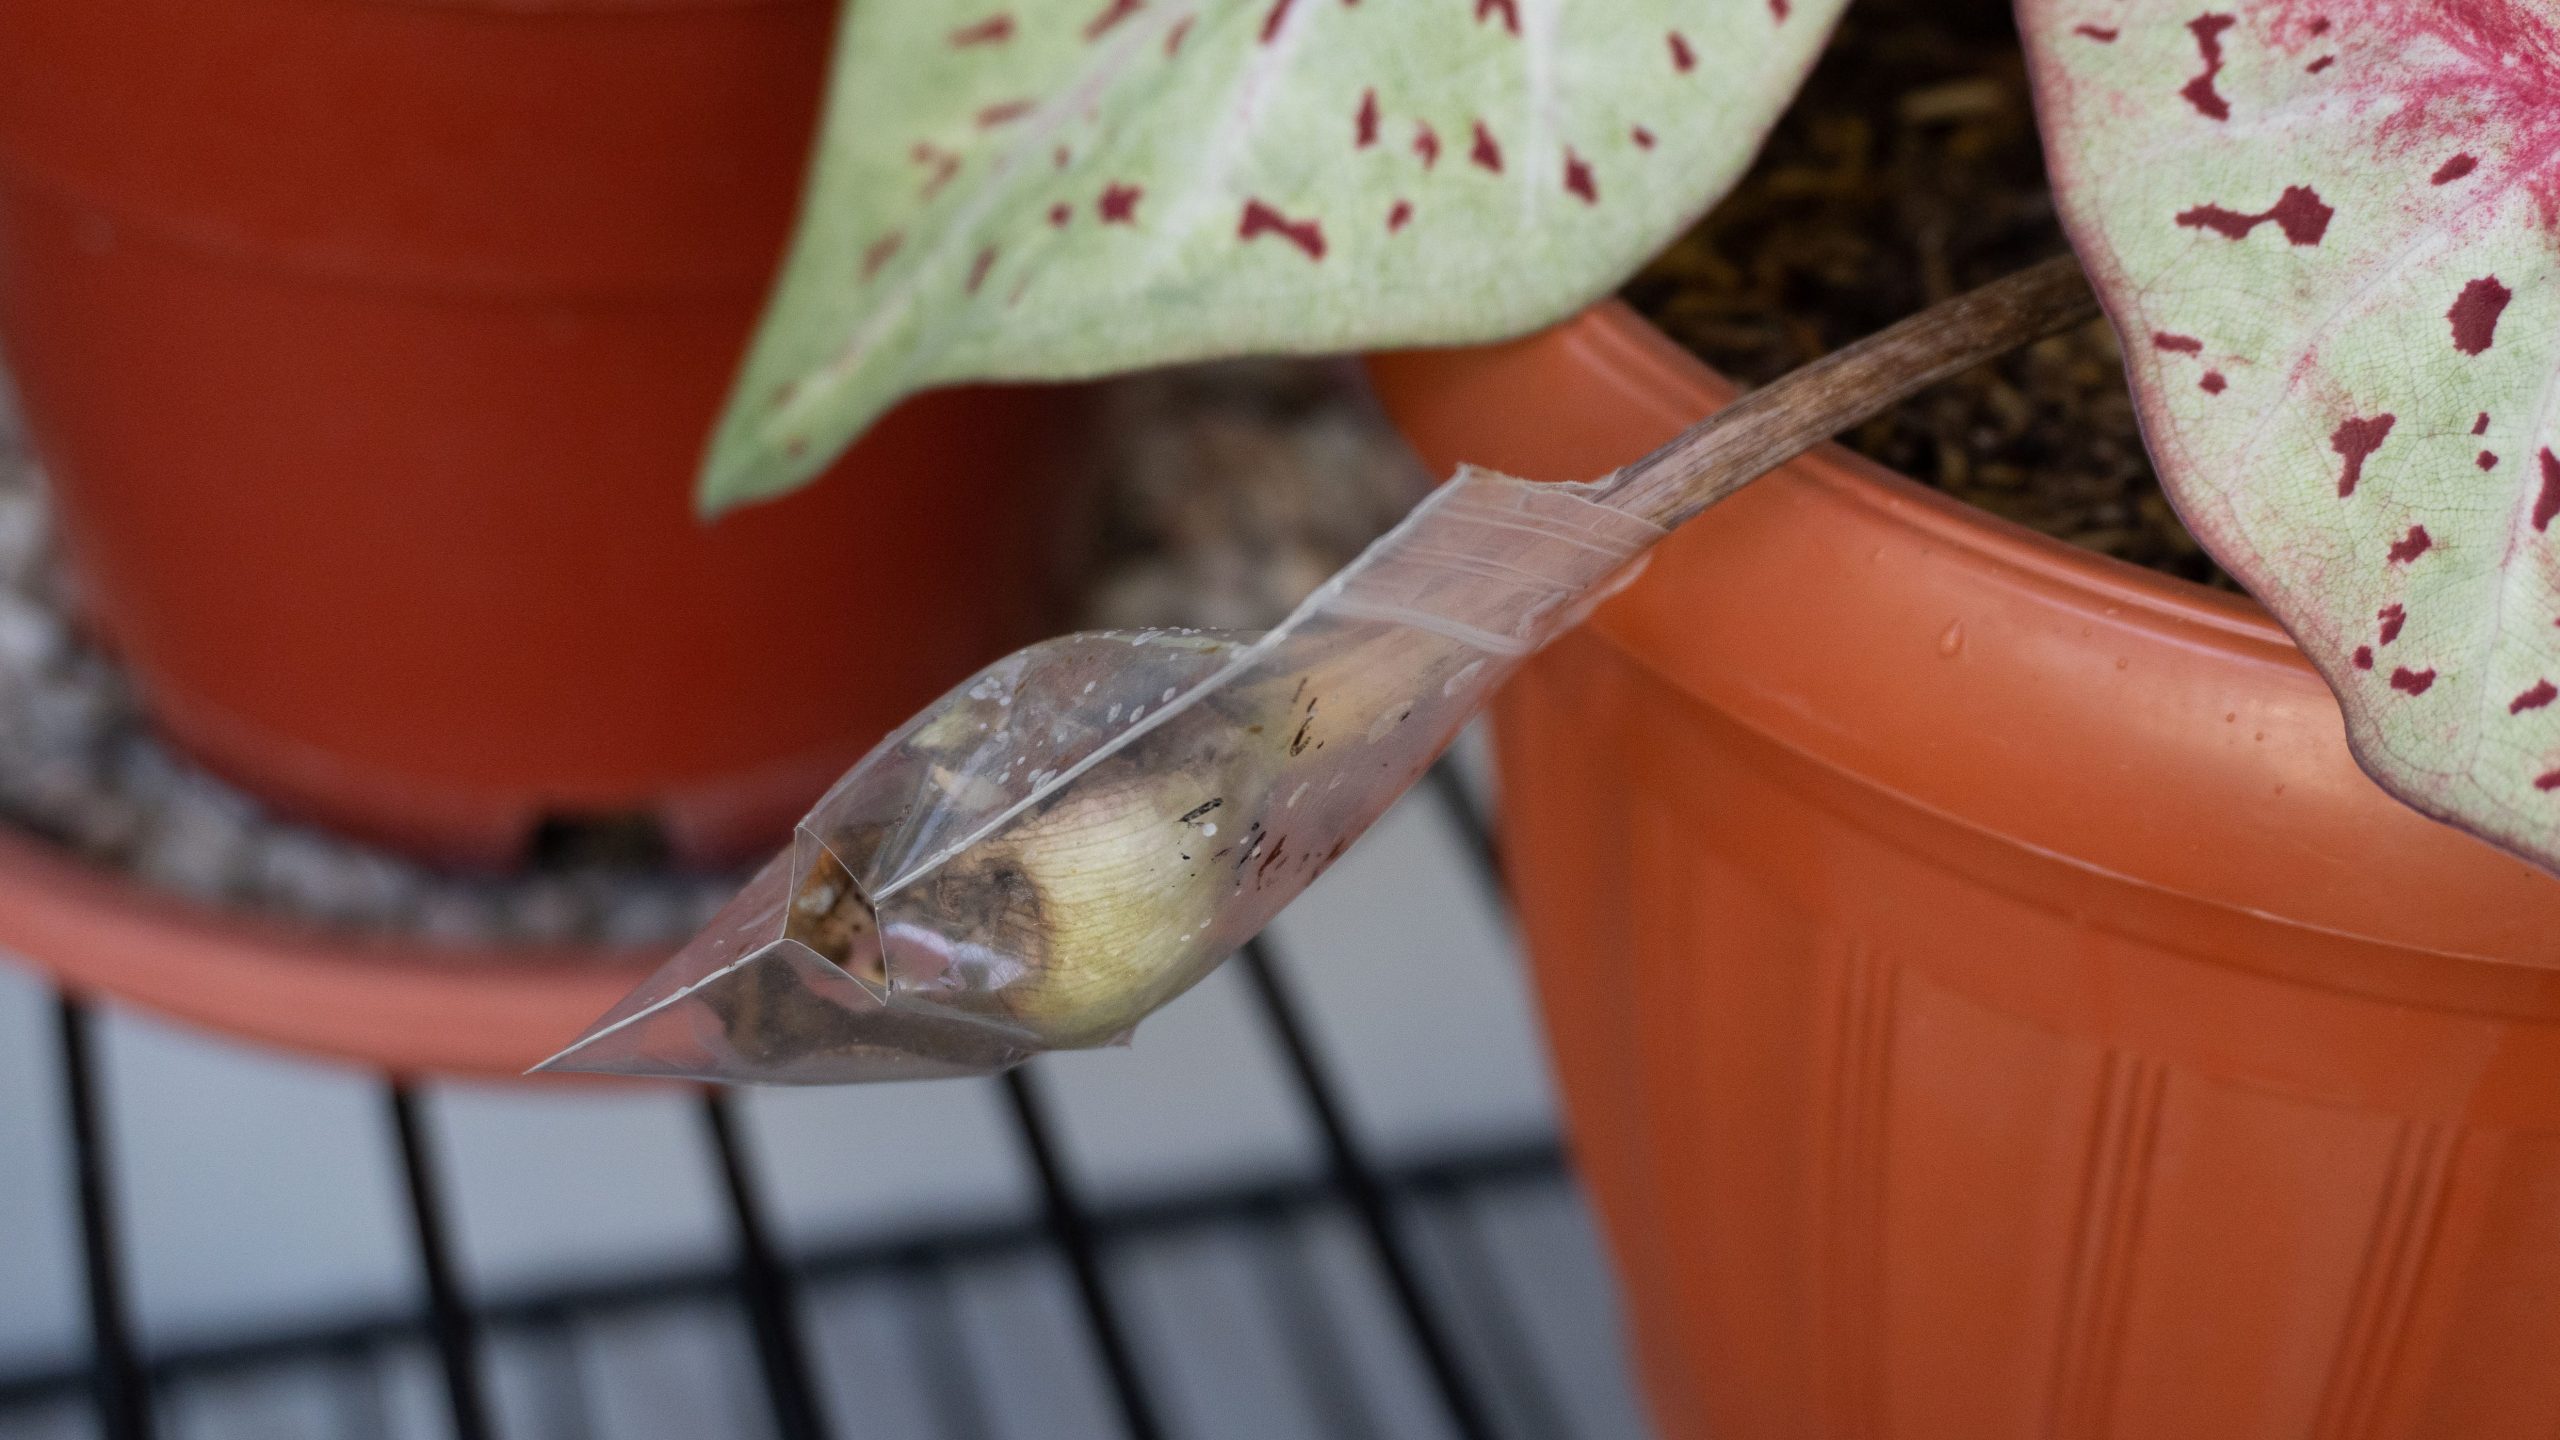 Protecting Caladium flower with plastic ziplock bag